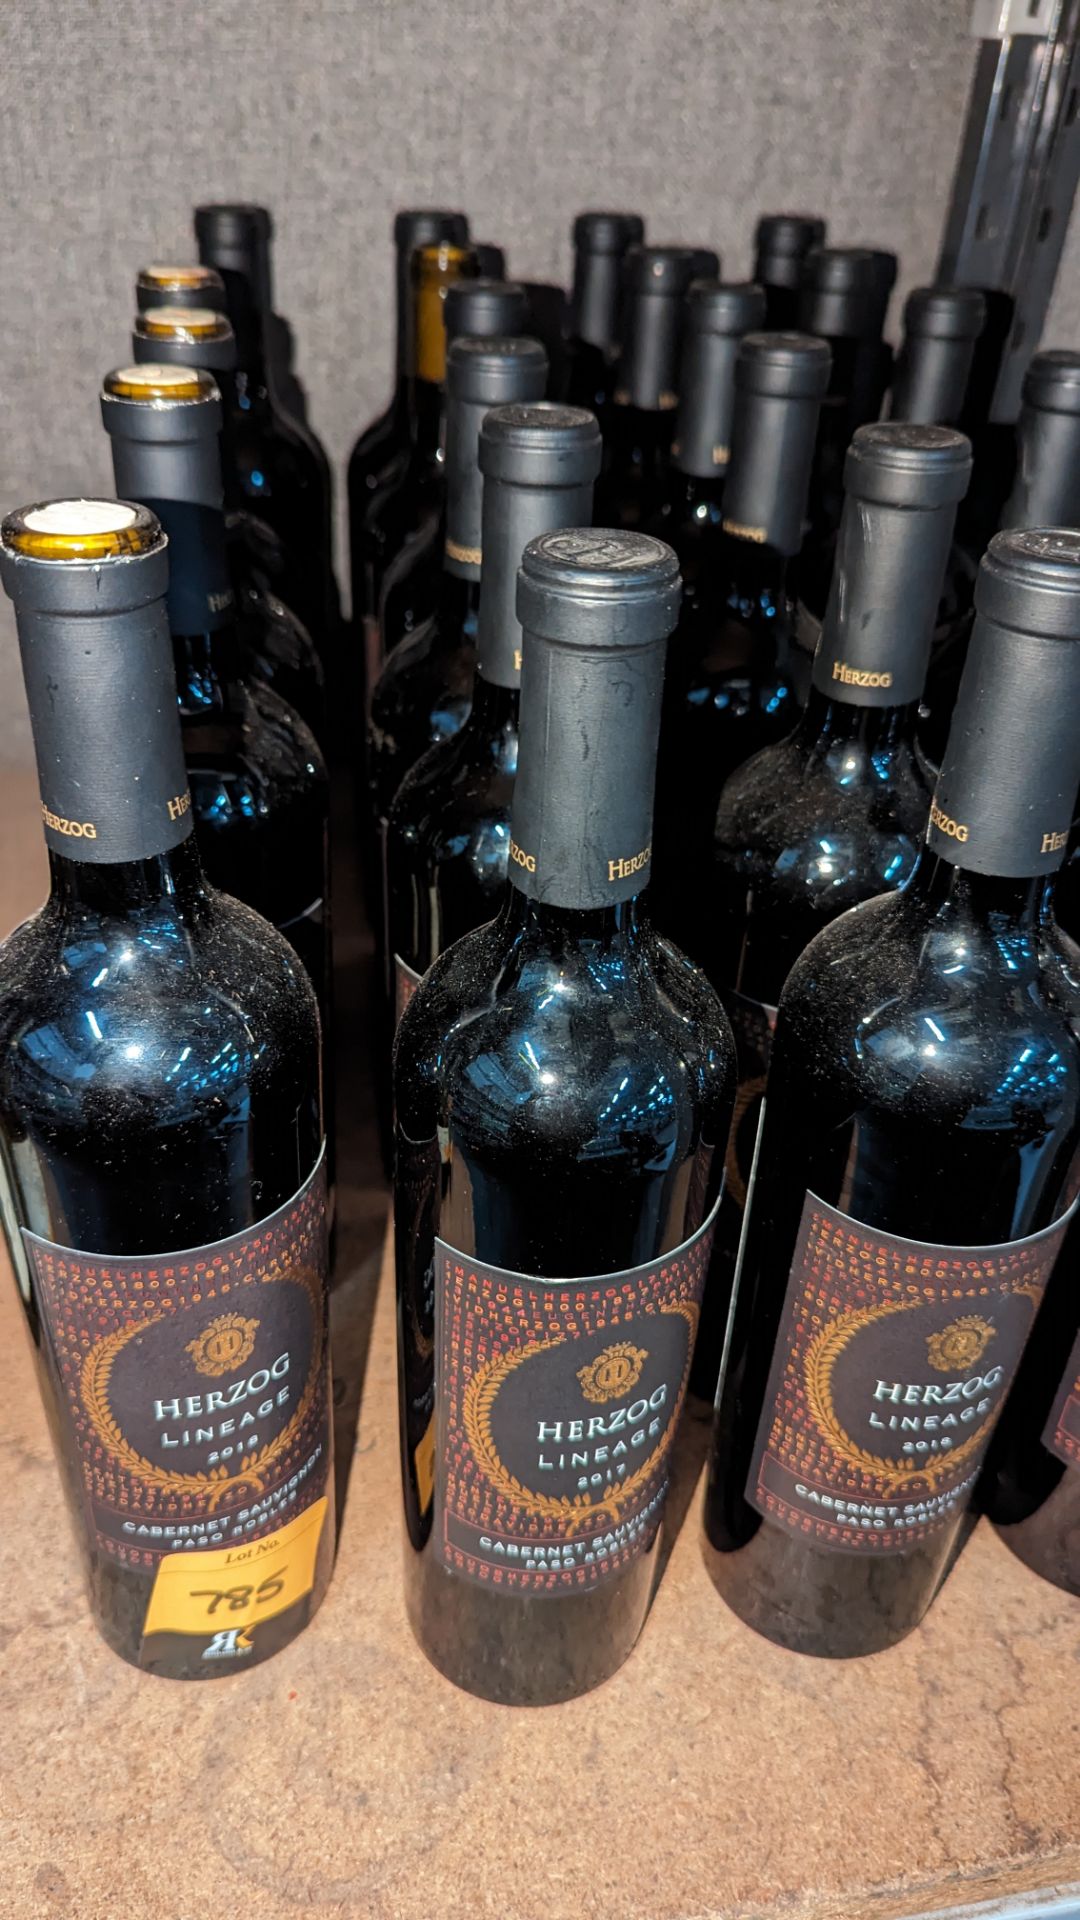 22 bottles of 2018 Herzog Lineage Cabernet Sauvignon Californian red wine & 1 bottle of 2017 Herzog - Image 3 of 6